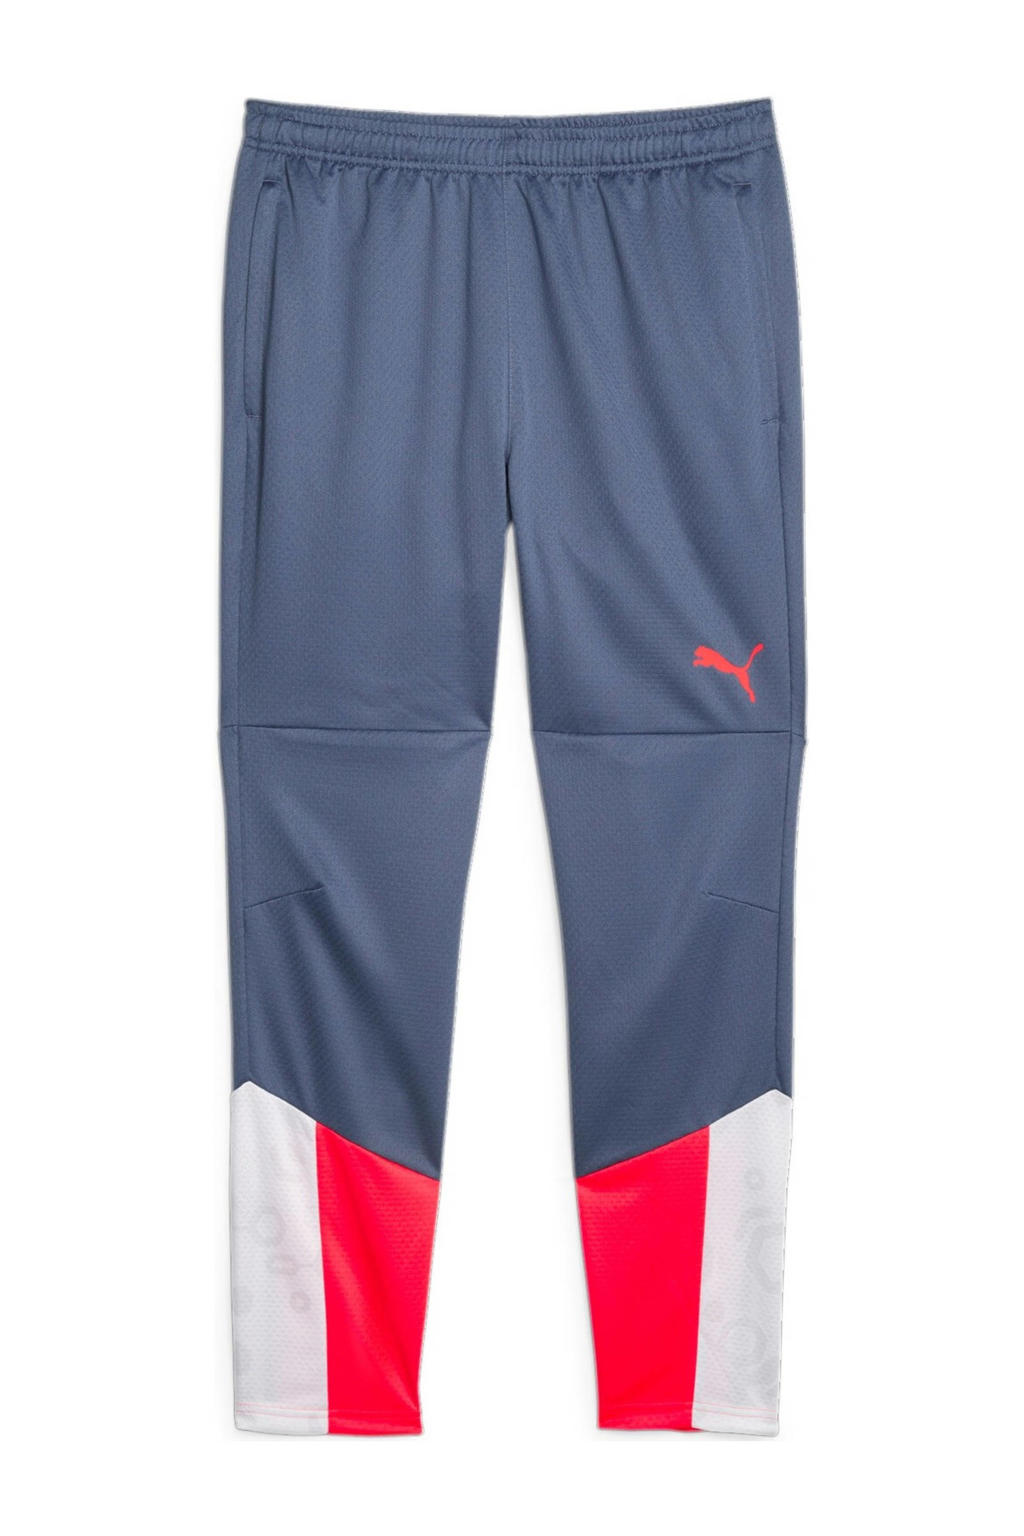 Donkerblauw, rood en witte heren Puma trainingsbroek van polyester met regular fit, regular waist en printopdruk